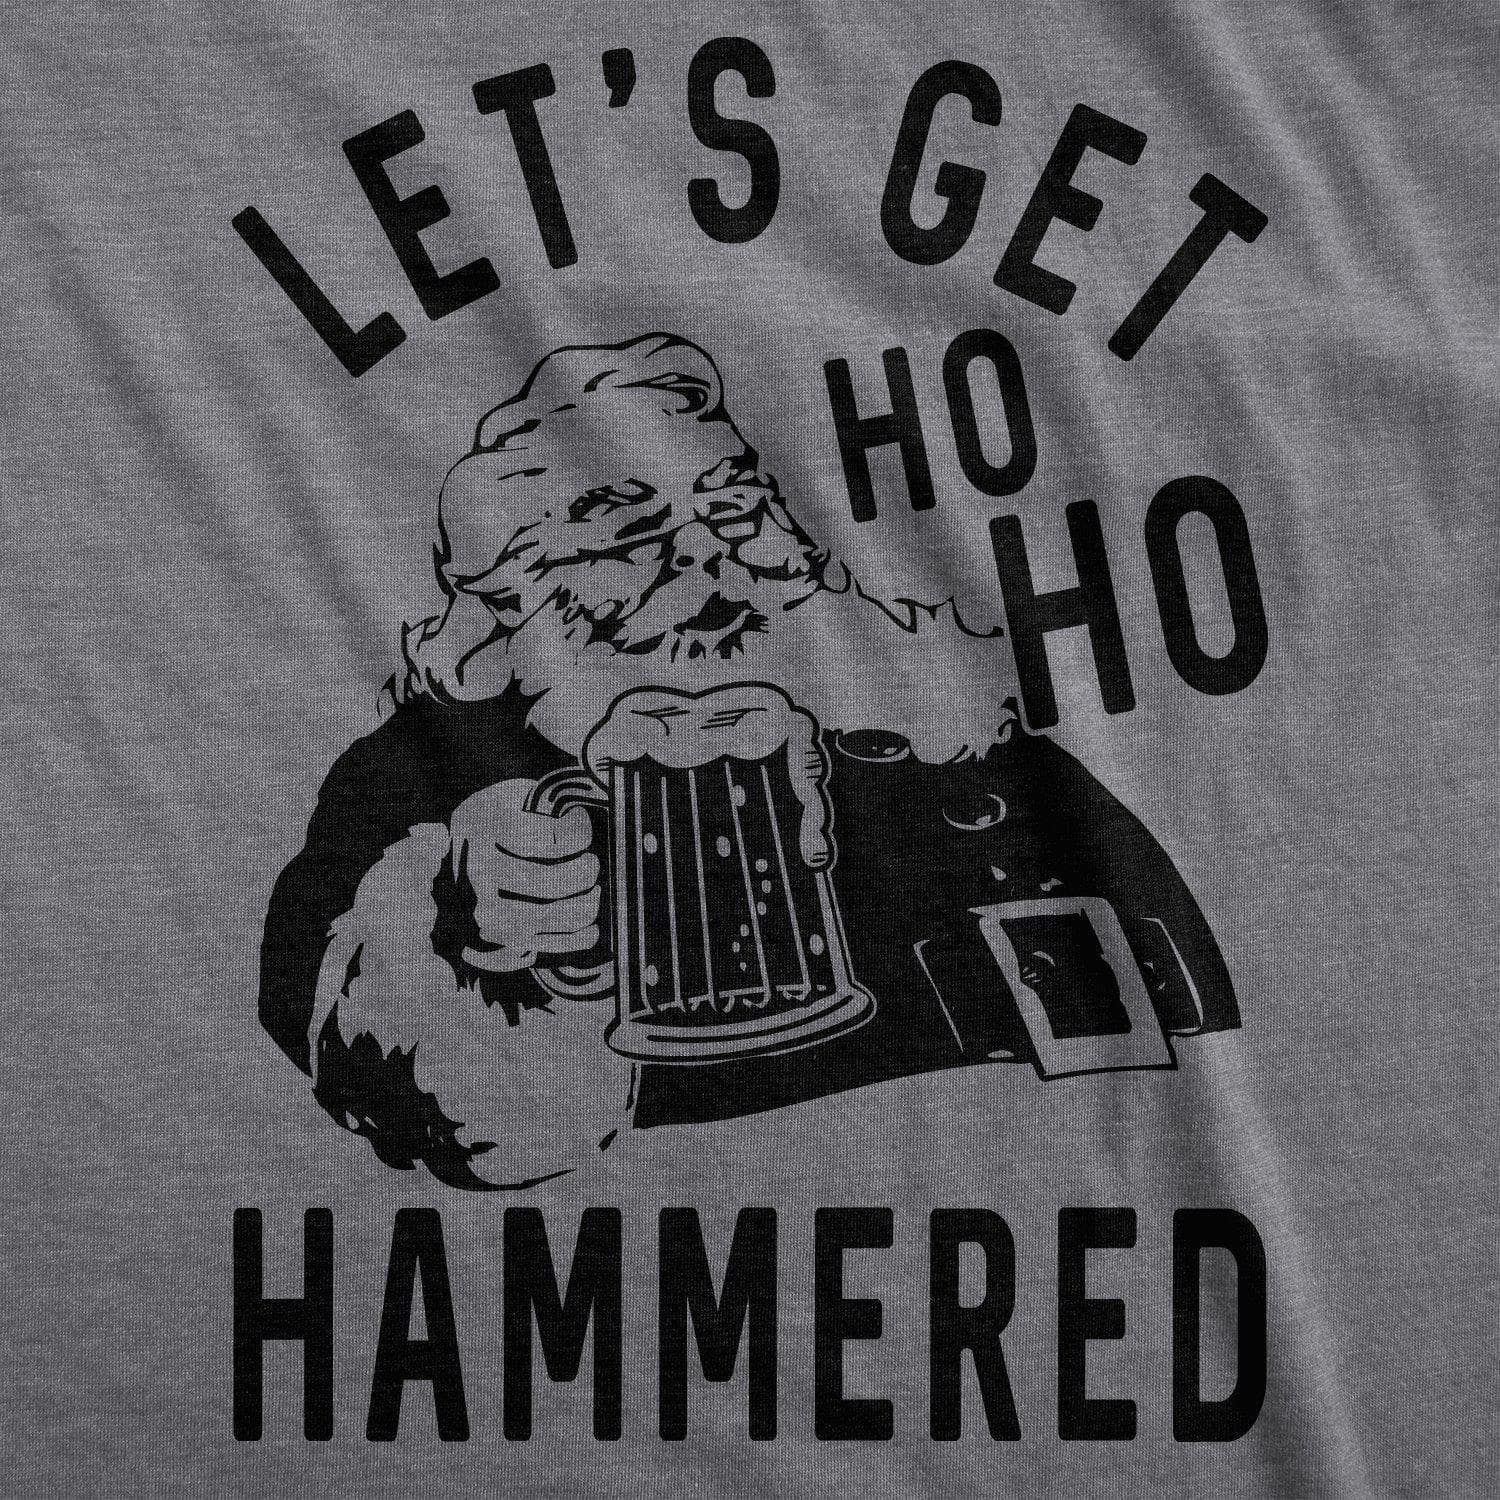 Ho Ho Hammered Men's Tshirt - Crazy Dog T-Shirts